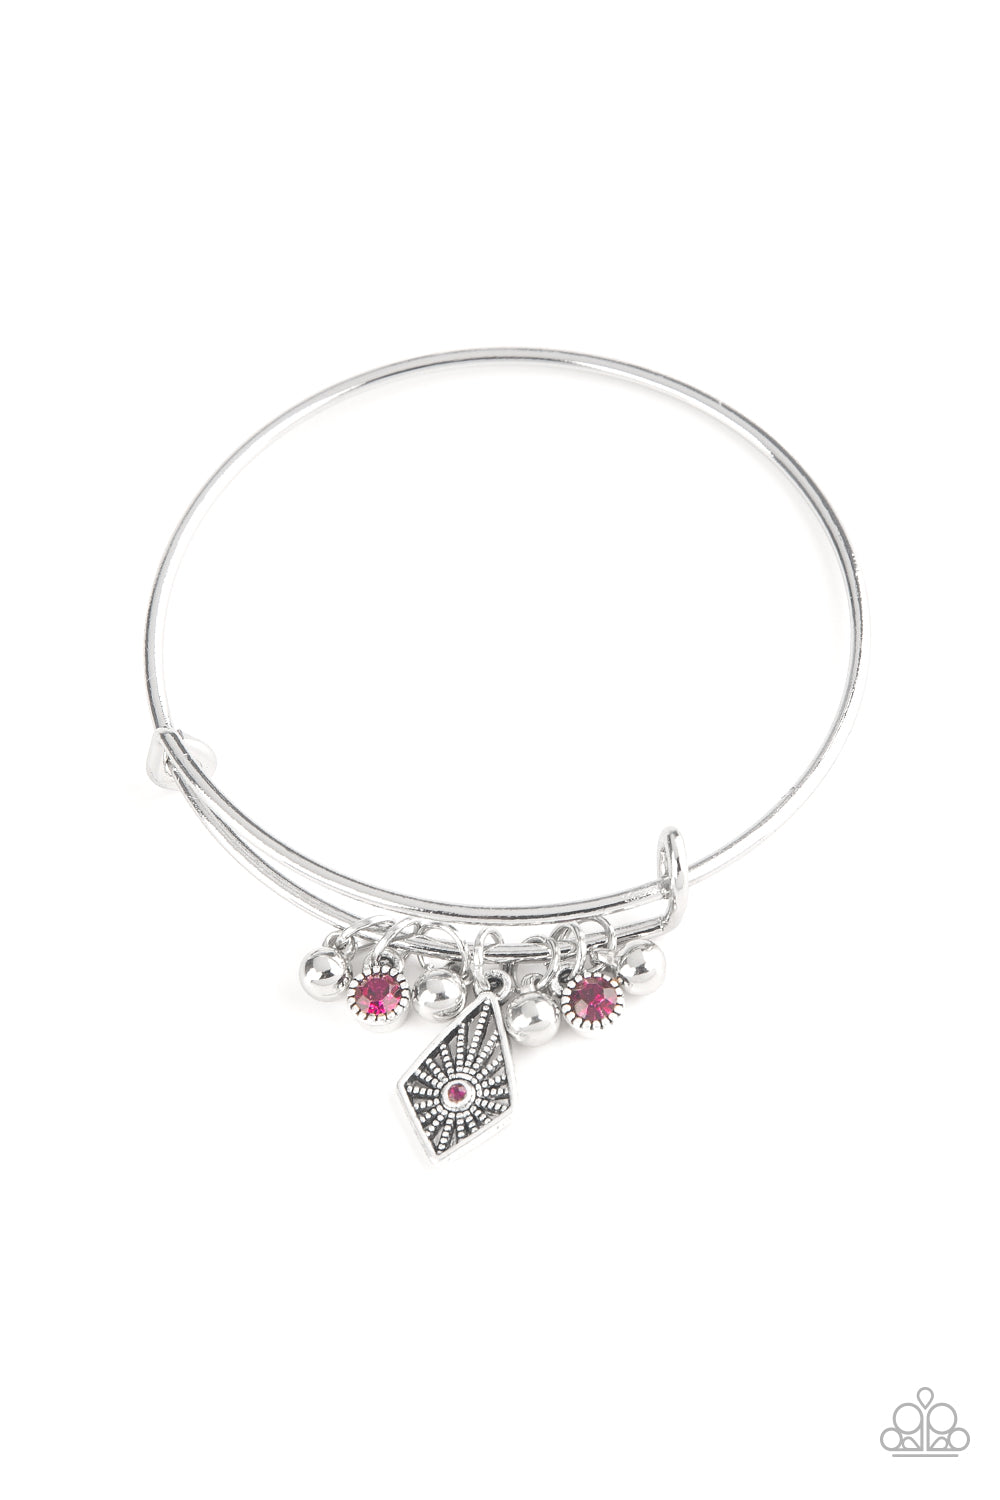 Treasure Charms - Pink Bracelet freeshipping - JewLz4u Gemstone Gallery